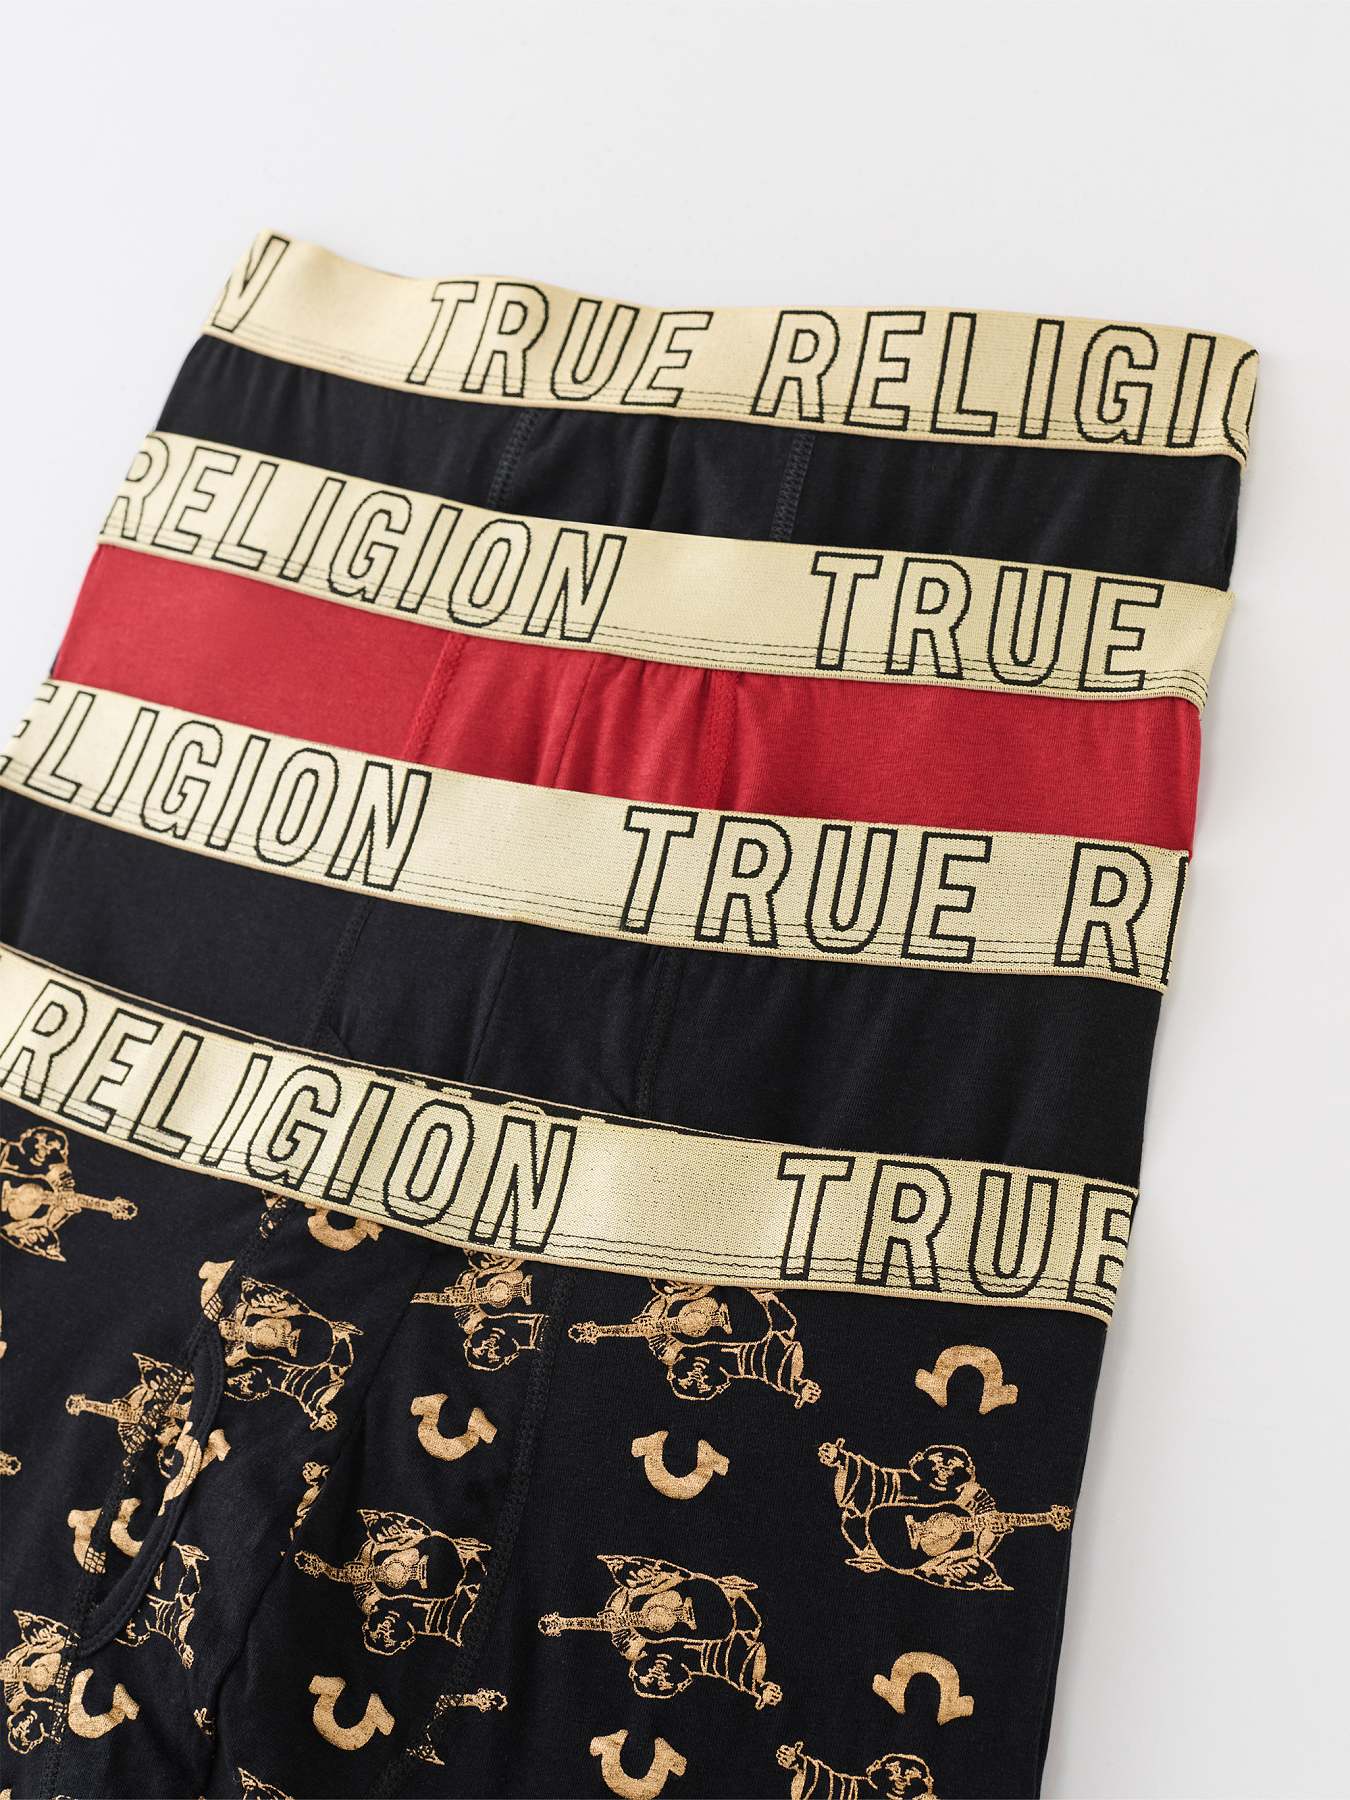 True Religion Mens Boxers 4 Pack Underwear Stretch Cotton Trunk